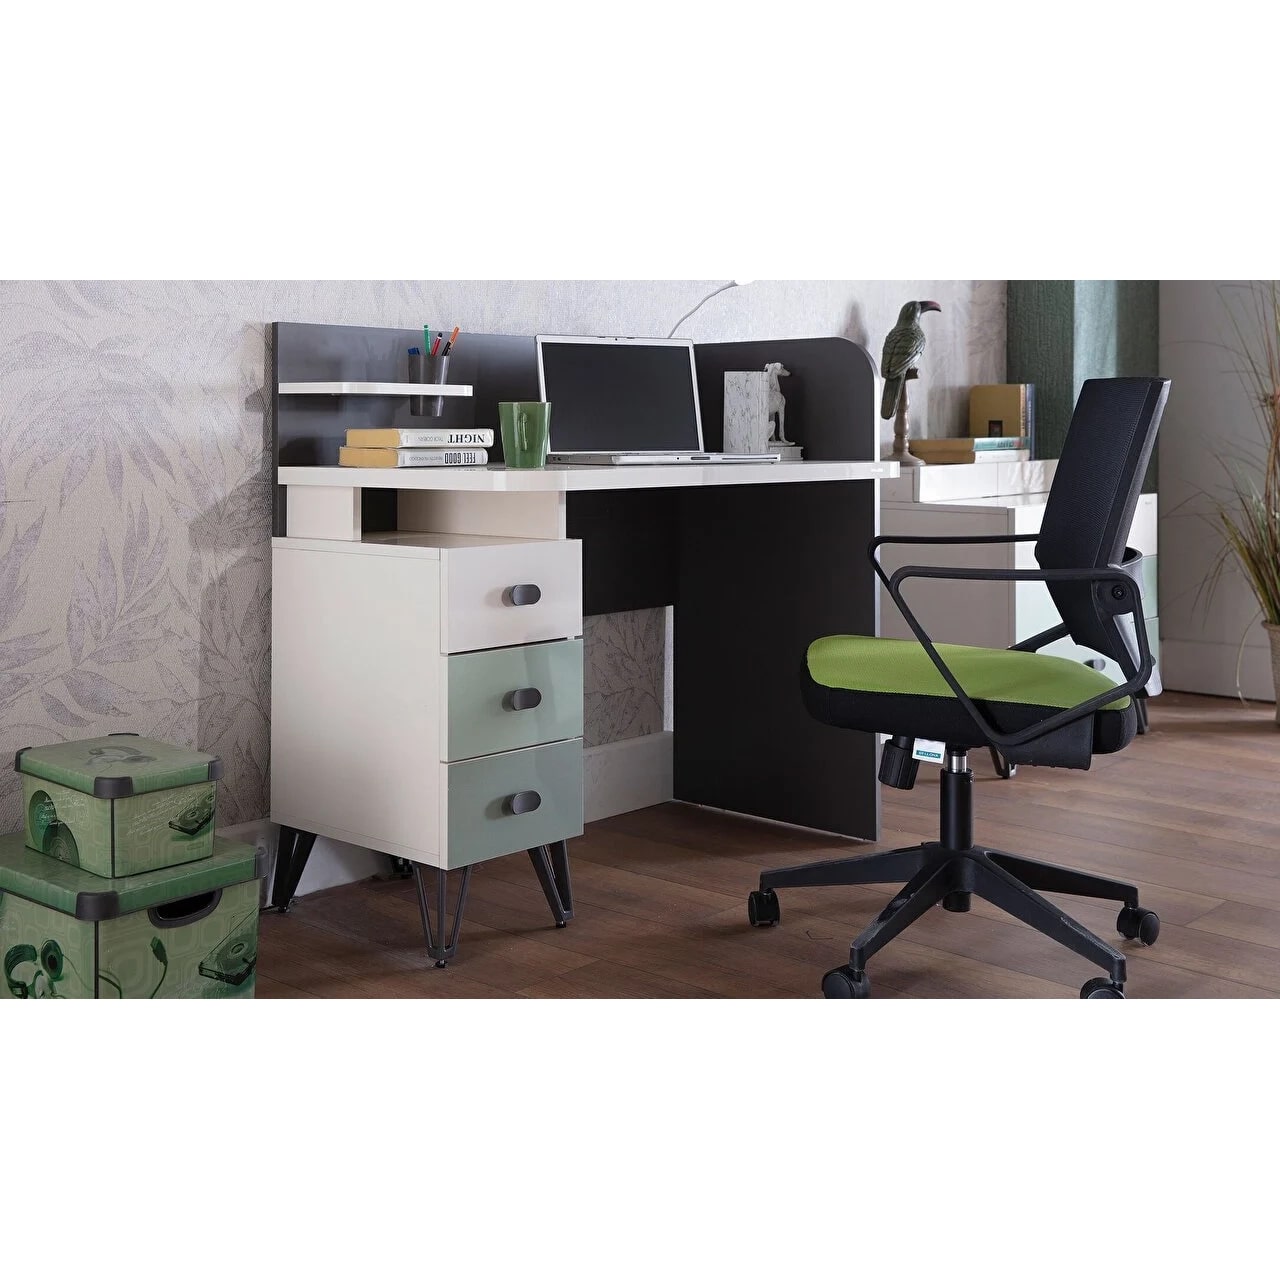 Стол письменный Bellona Menty, цвет: зеленый, размер 109х62х101 см (MENTY-14TP)MENTY-14TP